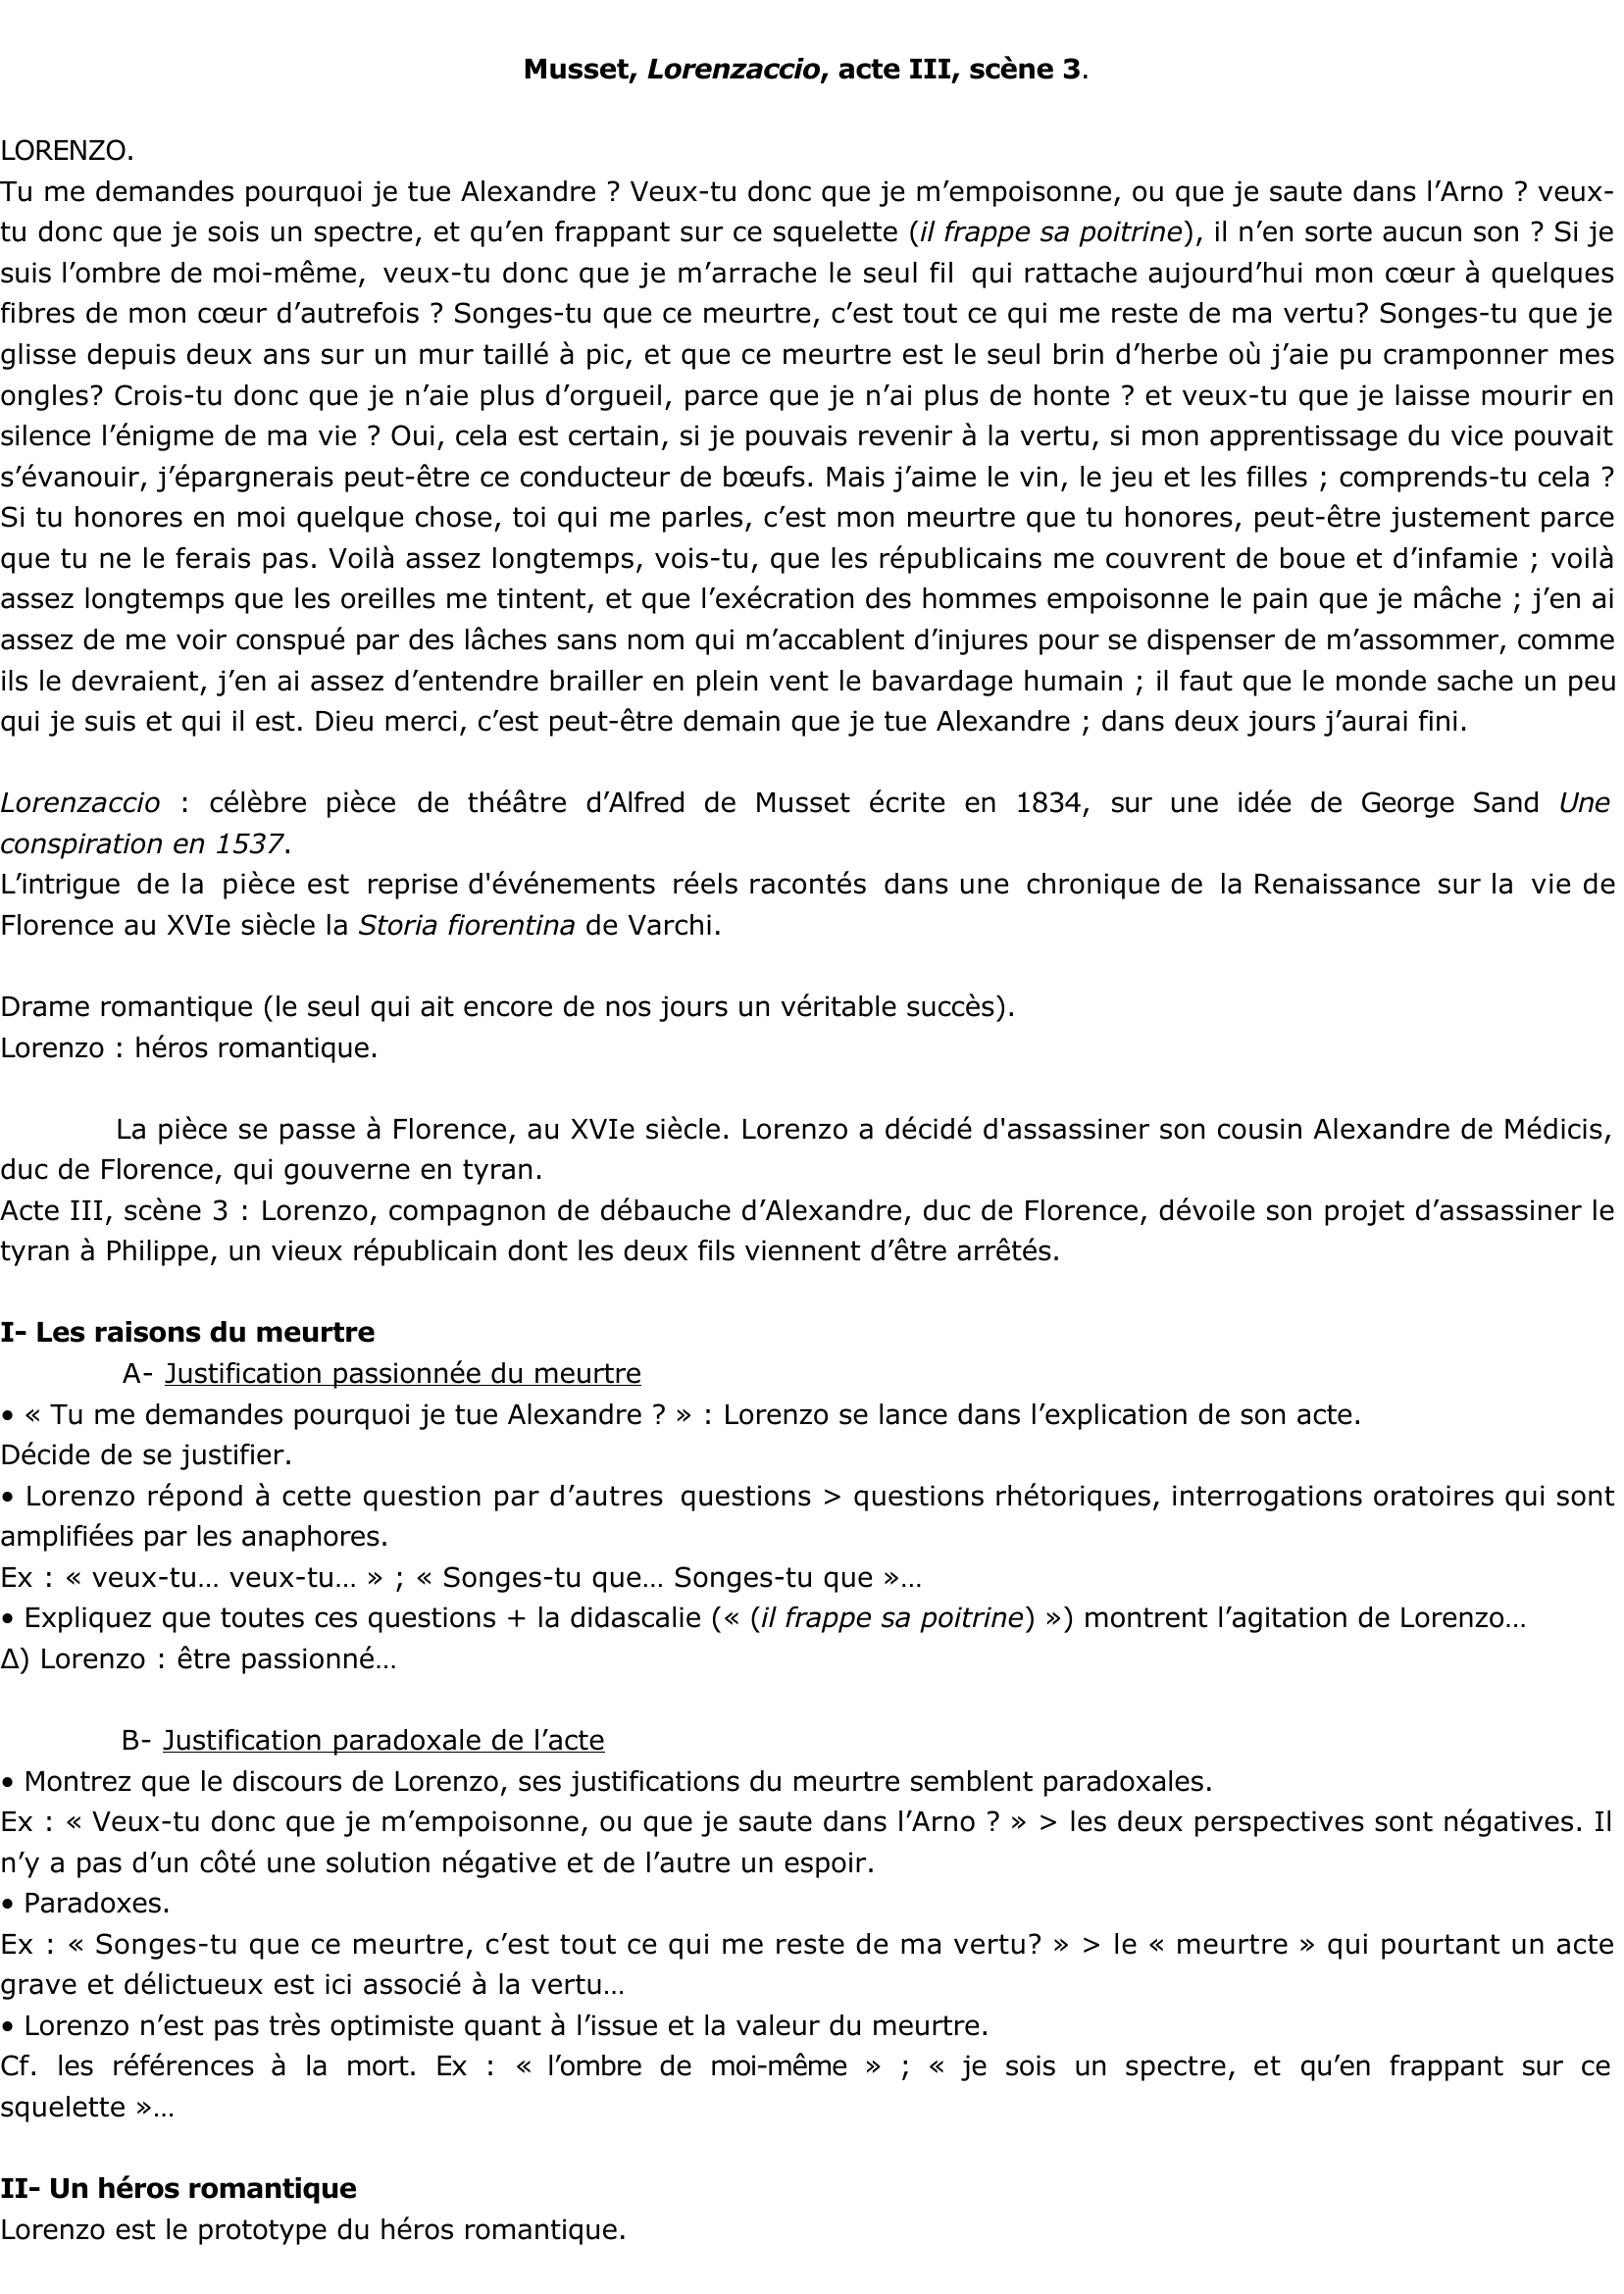 Prévisualisation du document Musset, Lorenzaccio, III, 3.